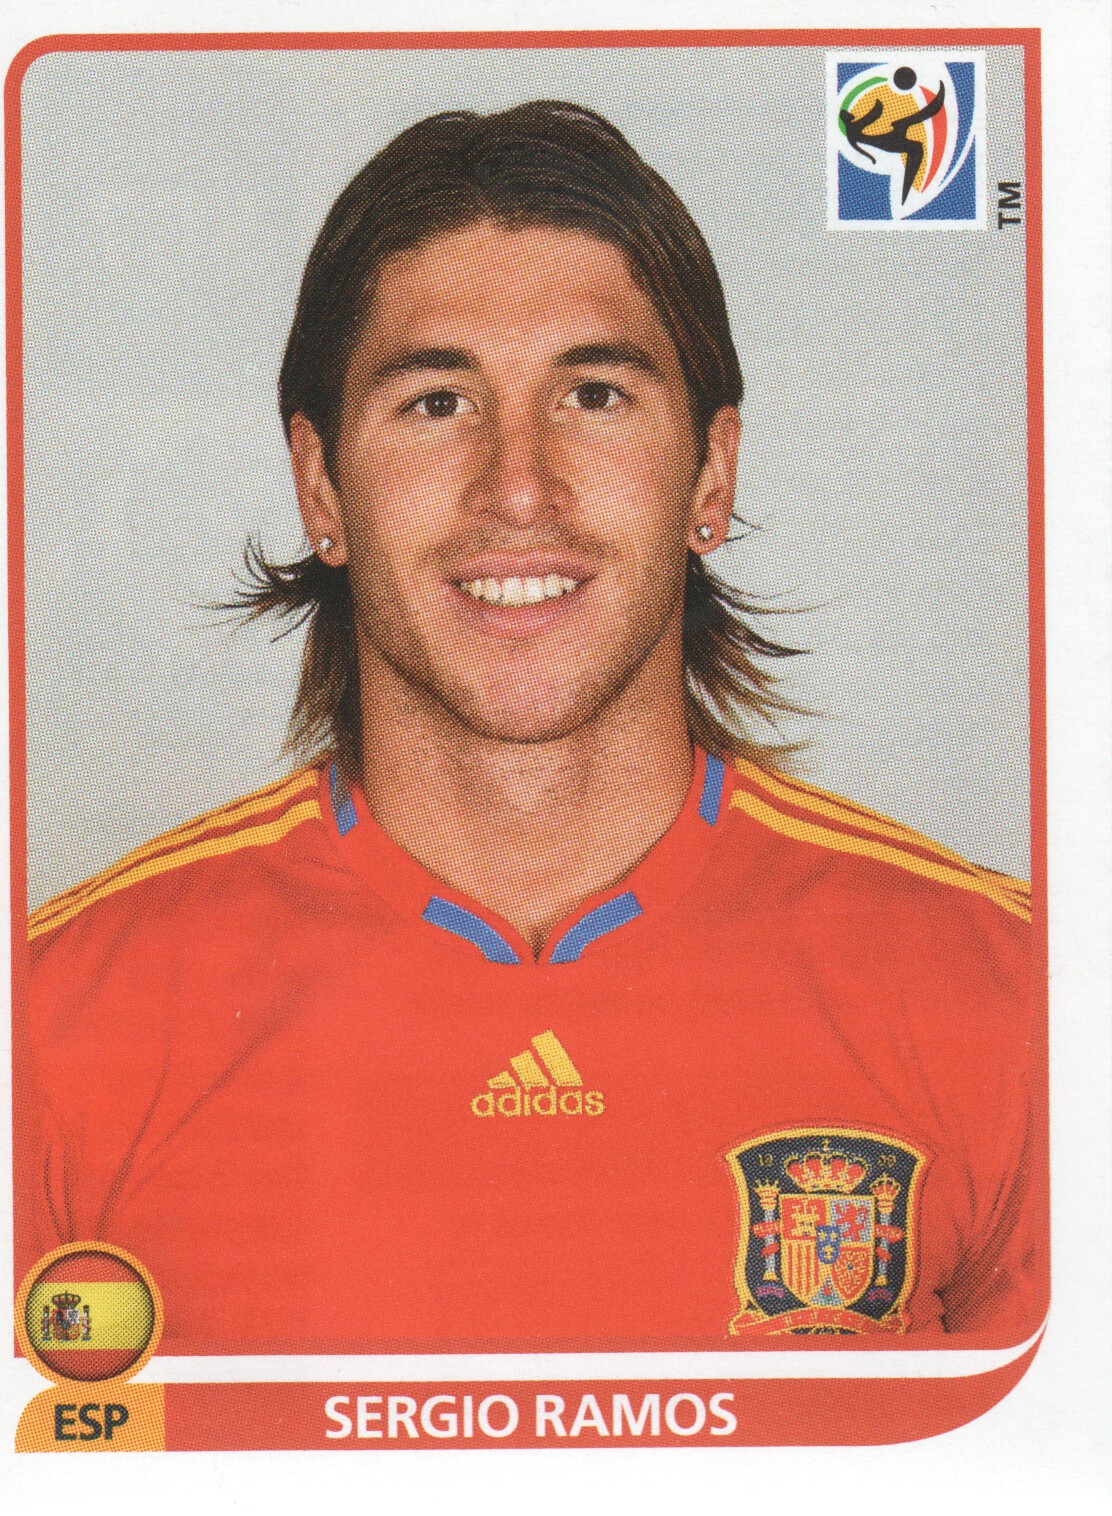 2010 Panini World Cup Stickers #567 Sergio Ramos - NM-MT